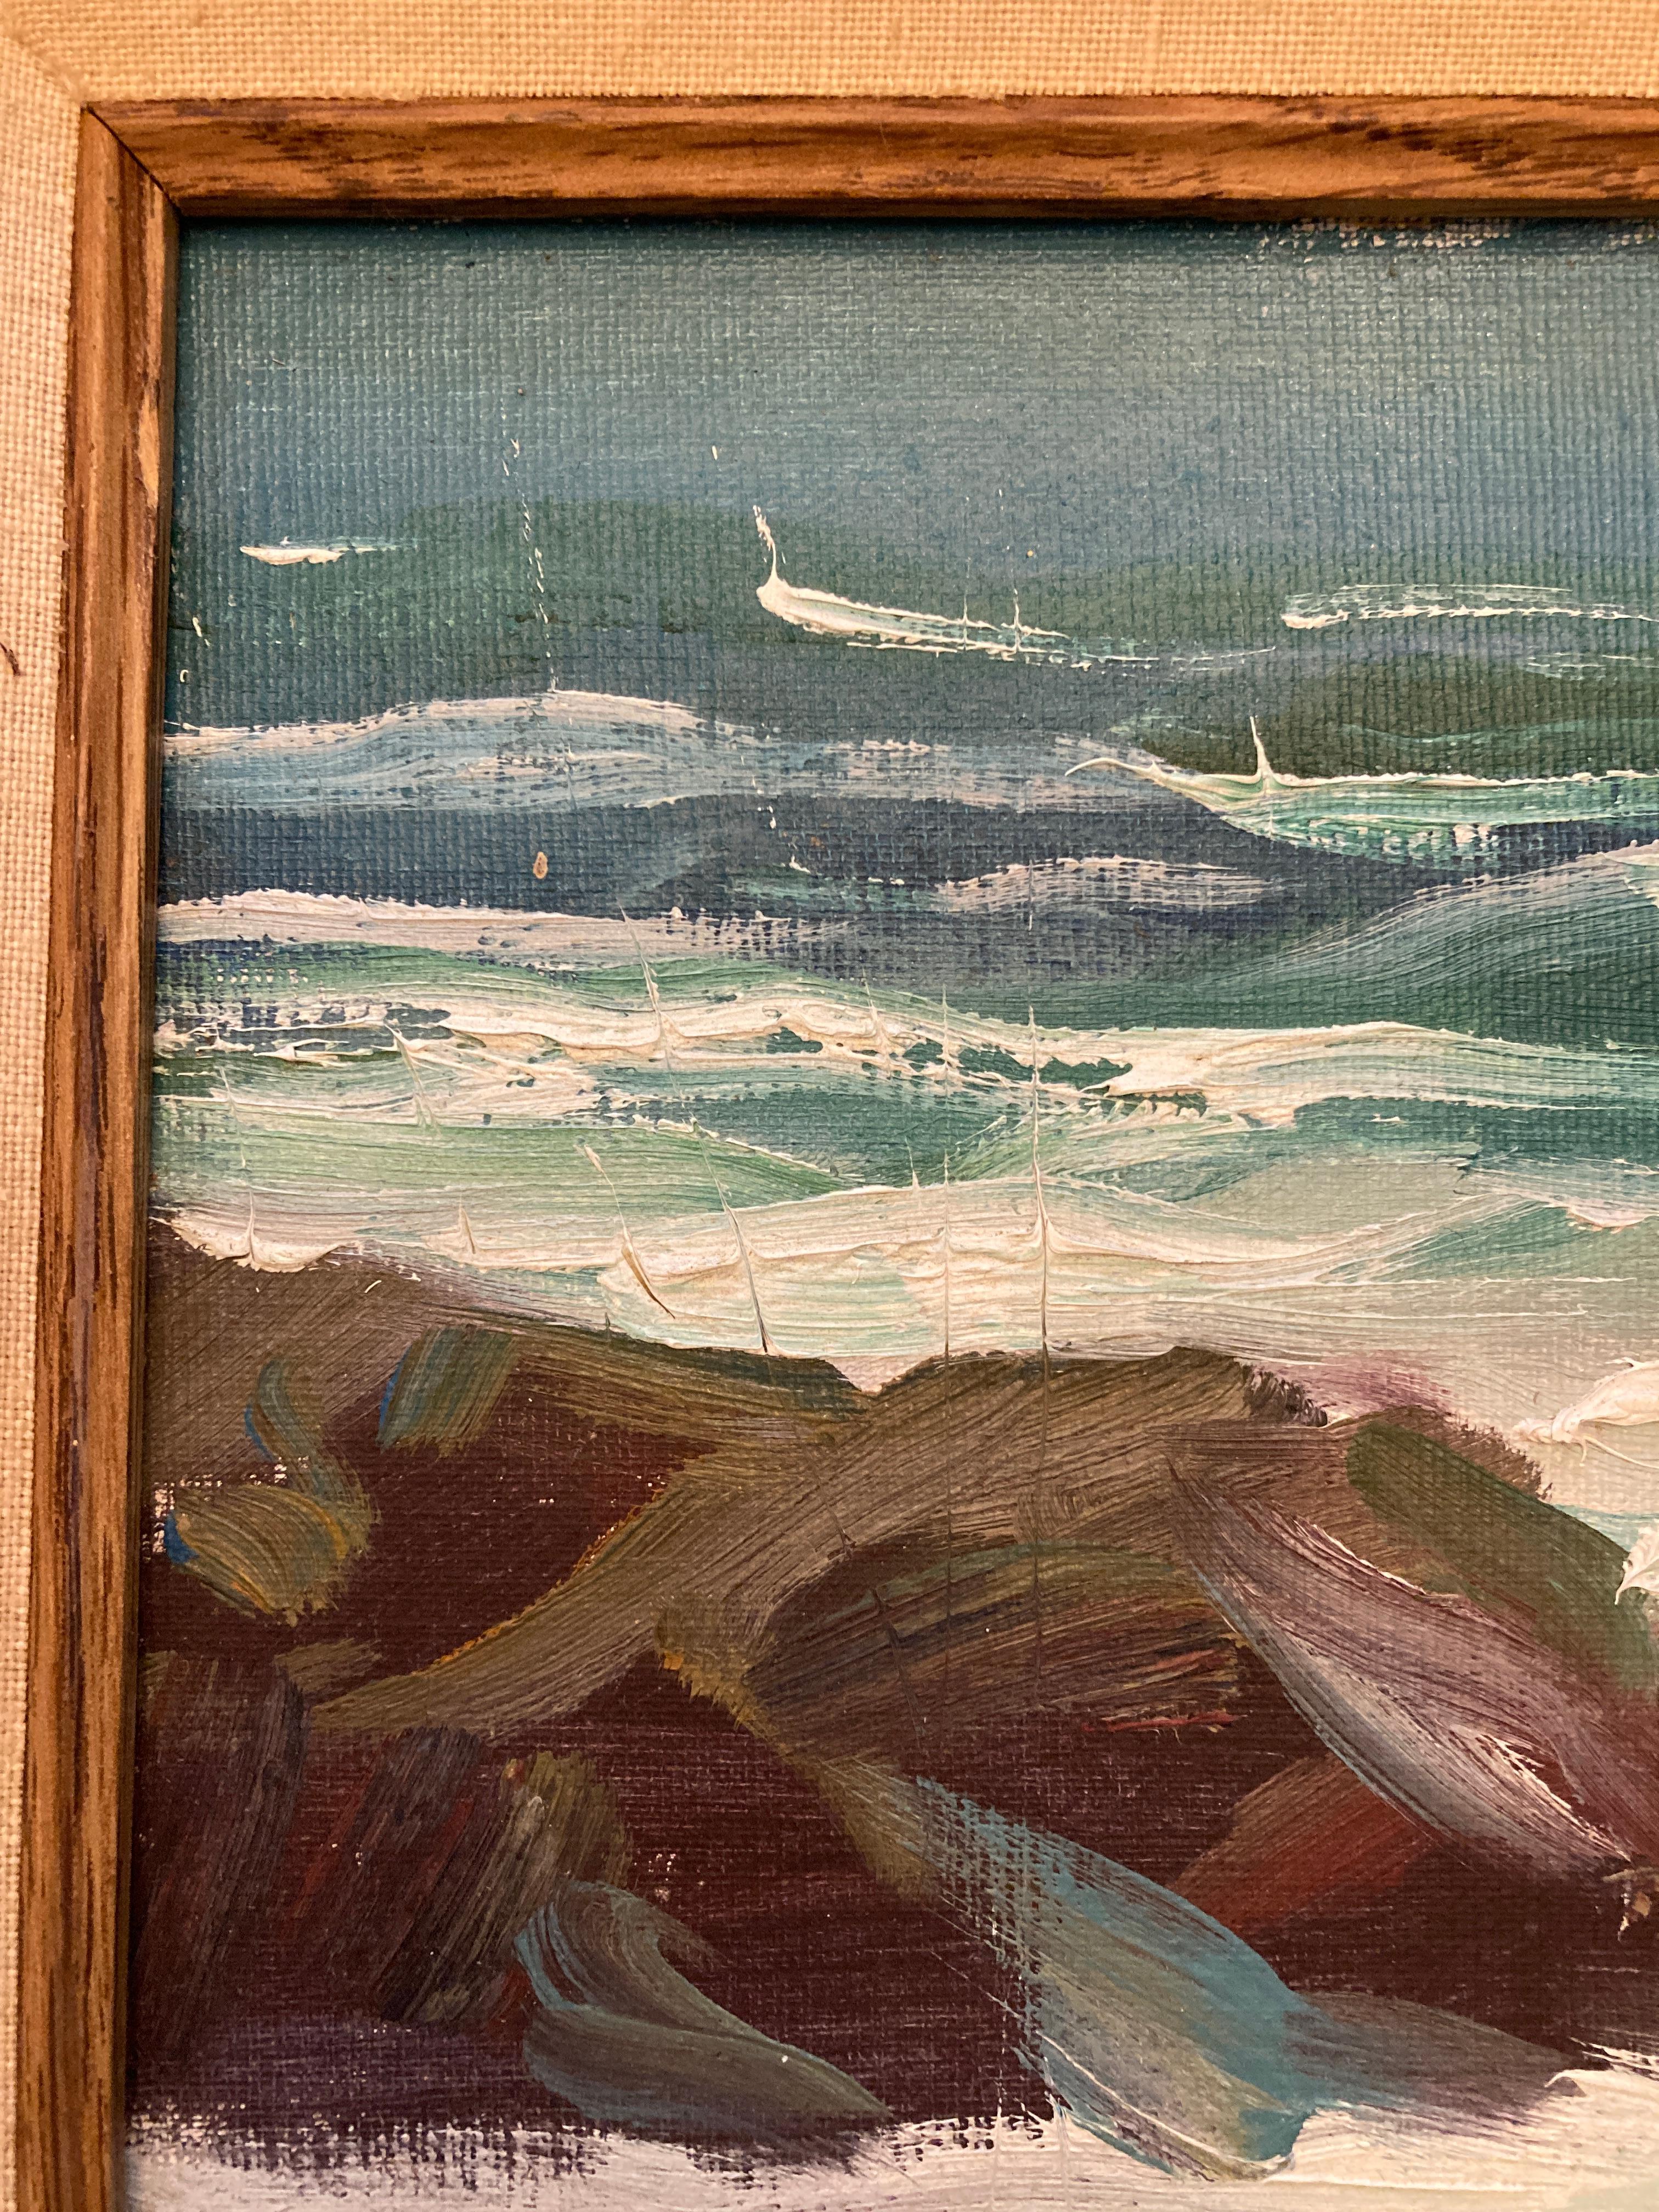 Edward Glafke 'Point Lobos' Carmel Impressionist Seascape Painting For Sale 5